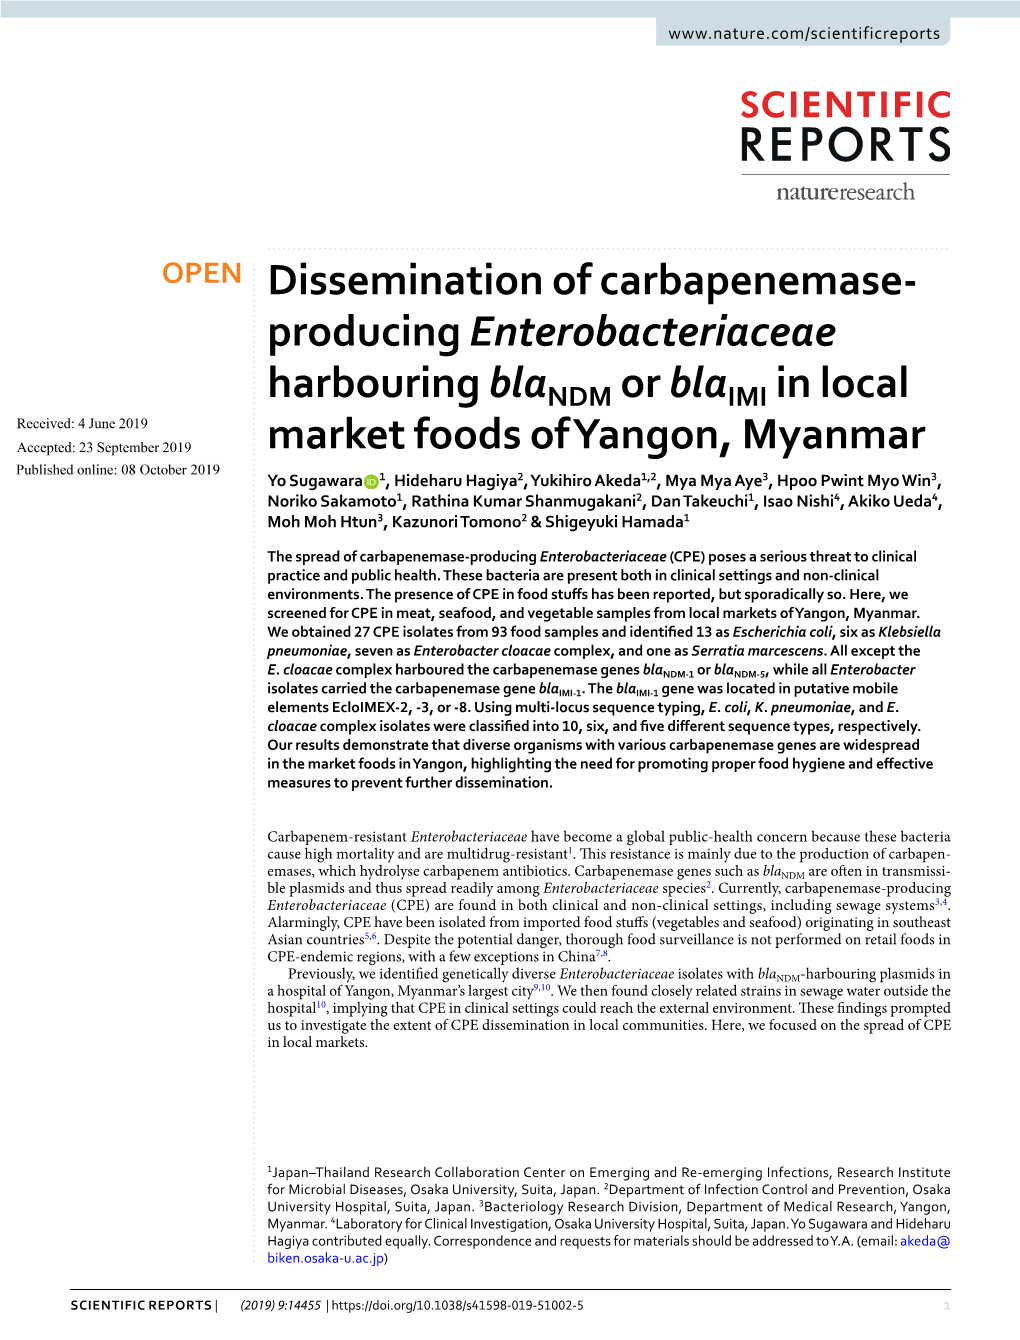 Dissemination of Carbapenemase-Producing